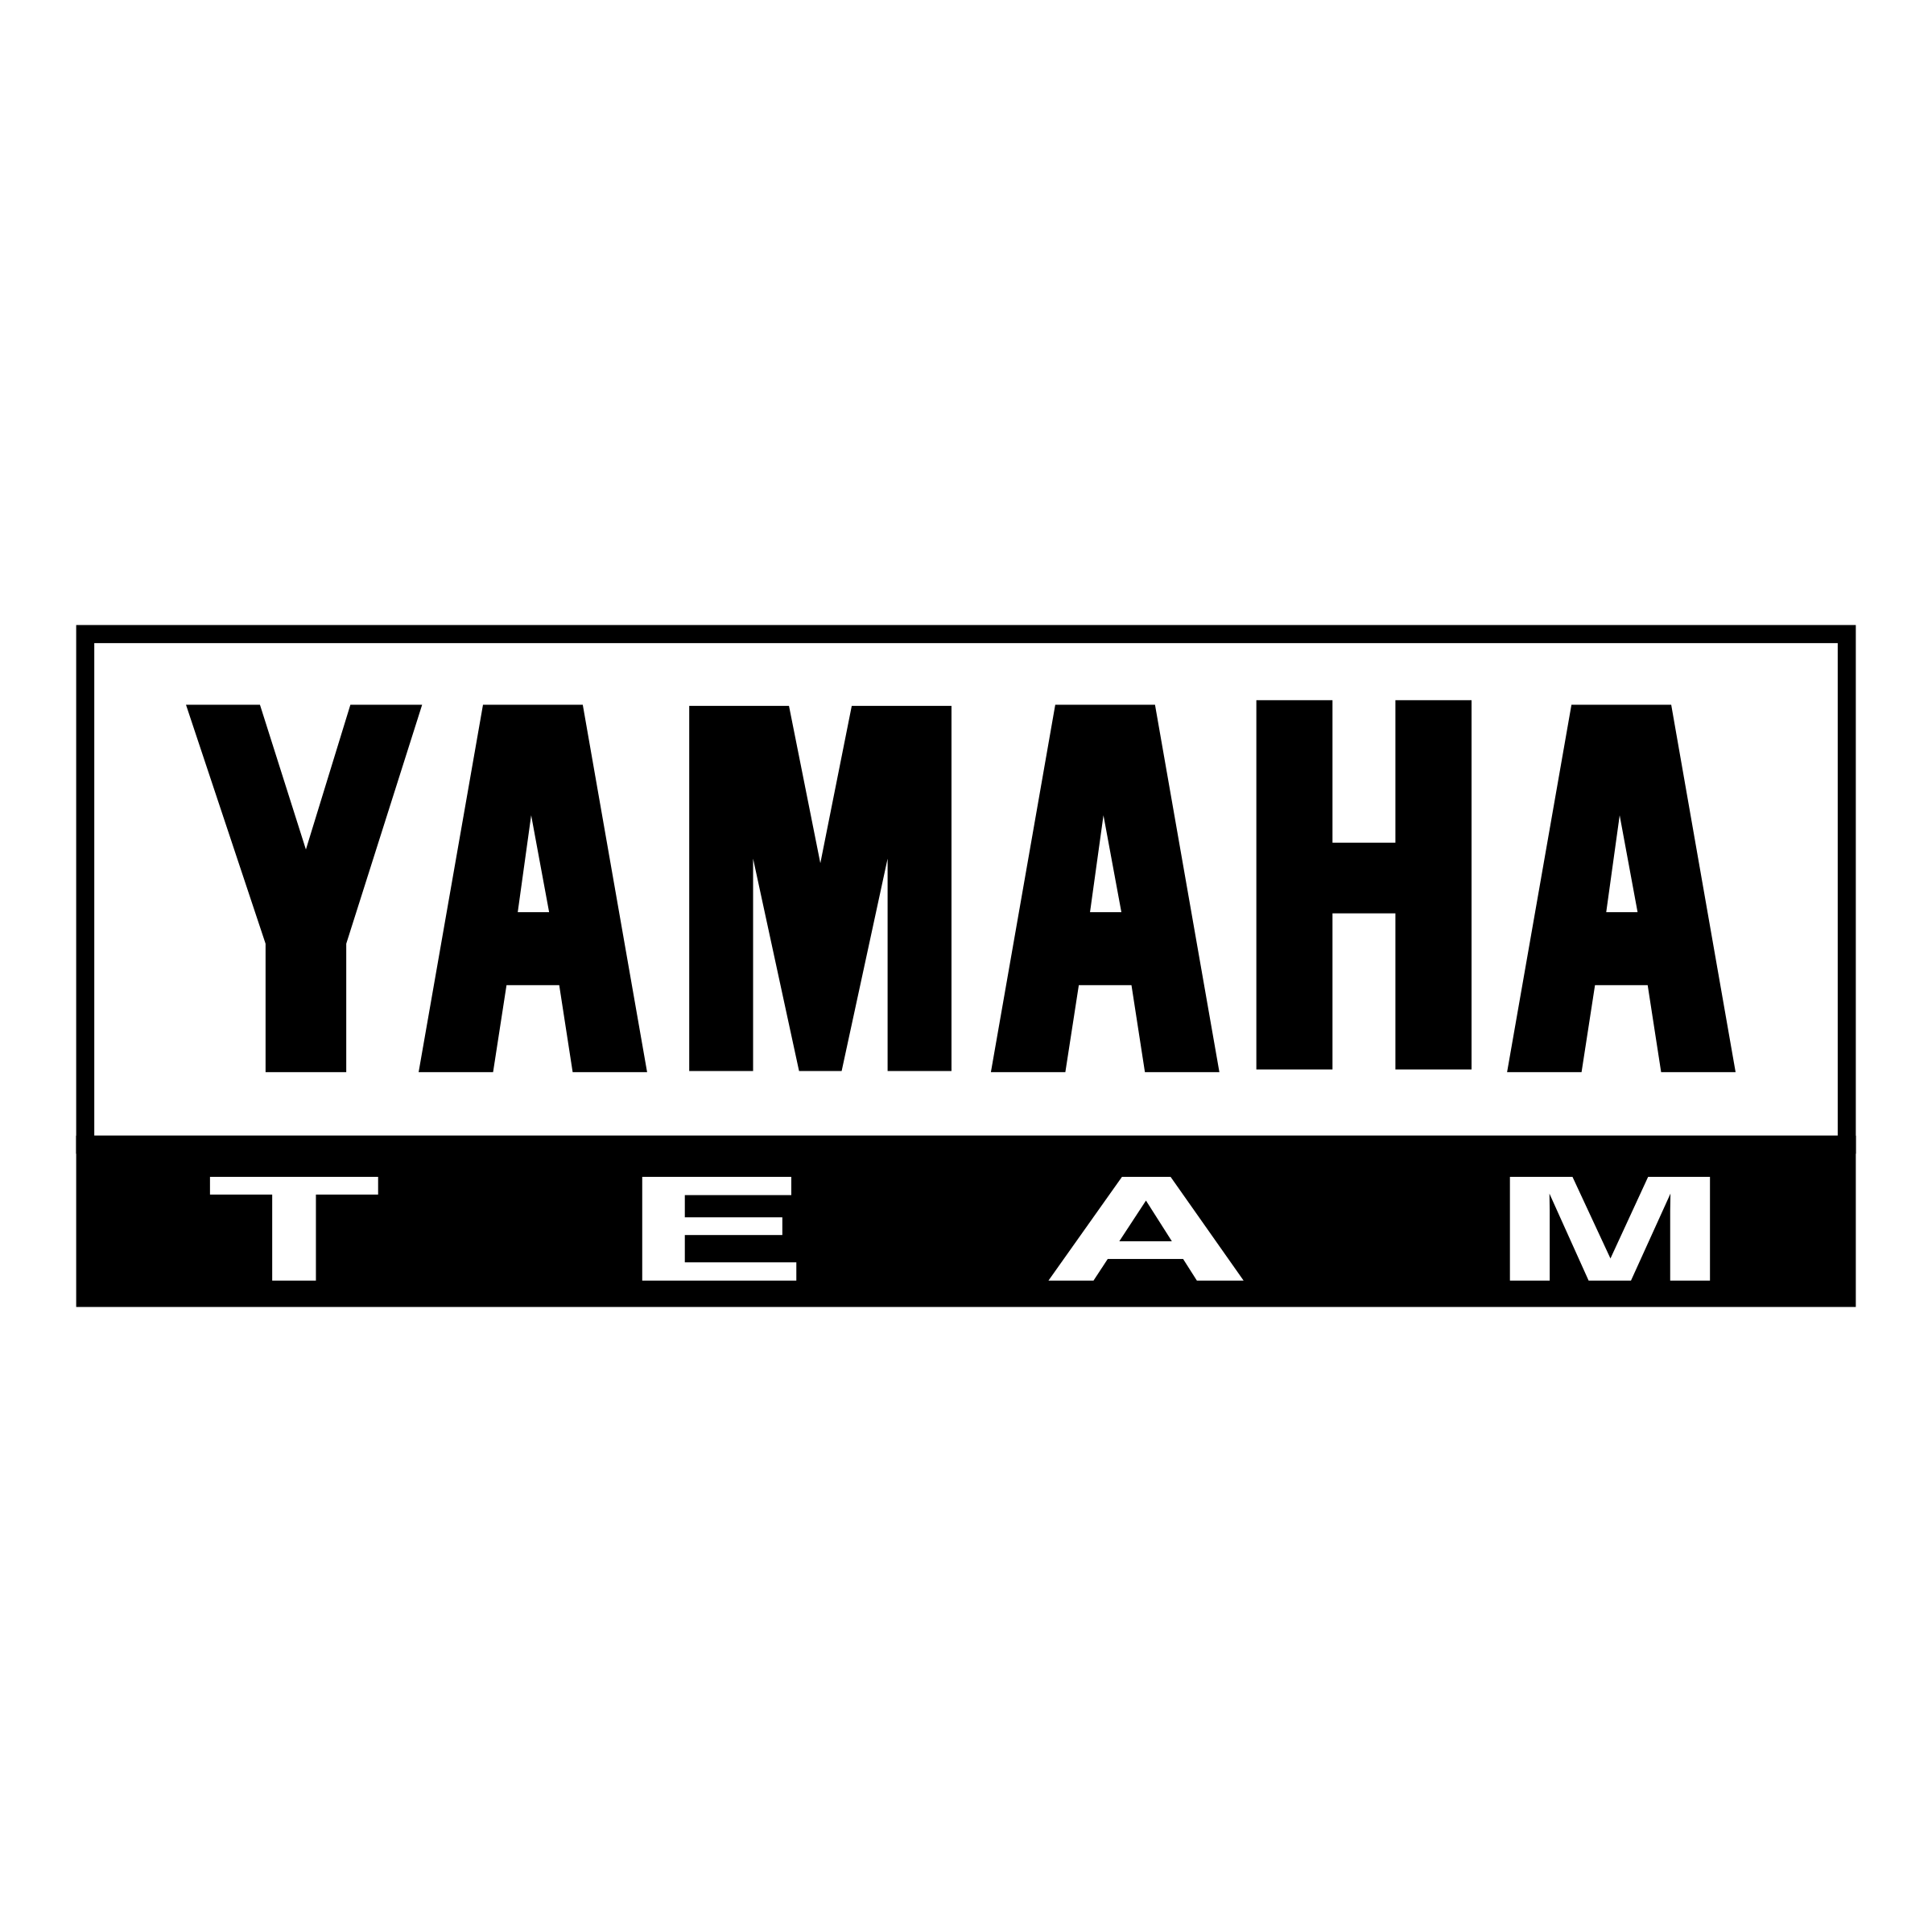 Yamalube Logo - Yamaha Team Logo PNG Transparent & SVG Vector - Freebie Supply